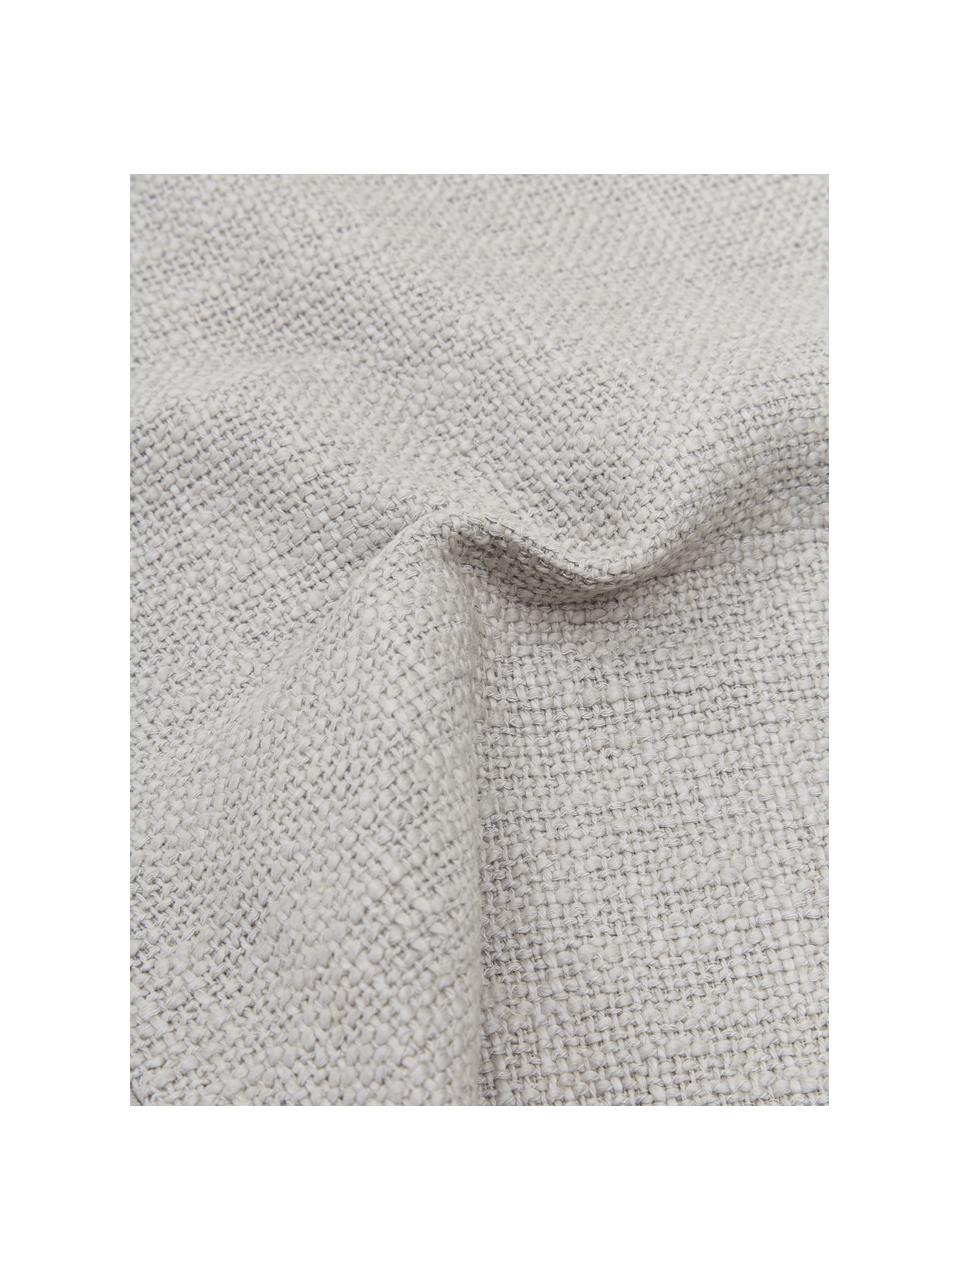 Kissenhülle Anise in Grau, 100% Baumwolle, Grau, B 30 x L 50 cm